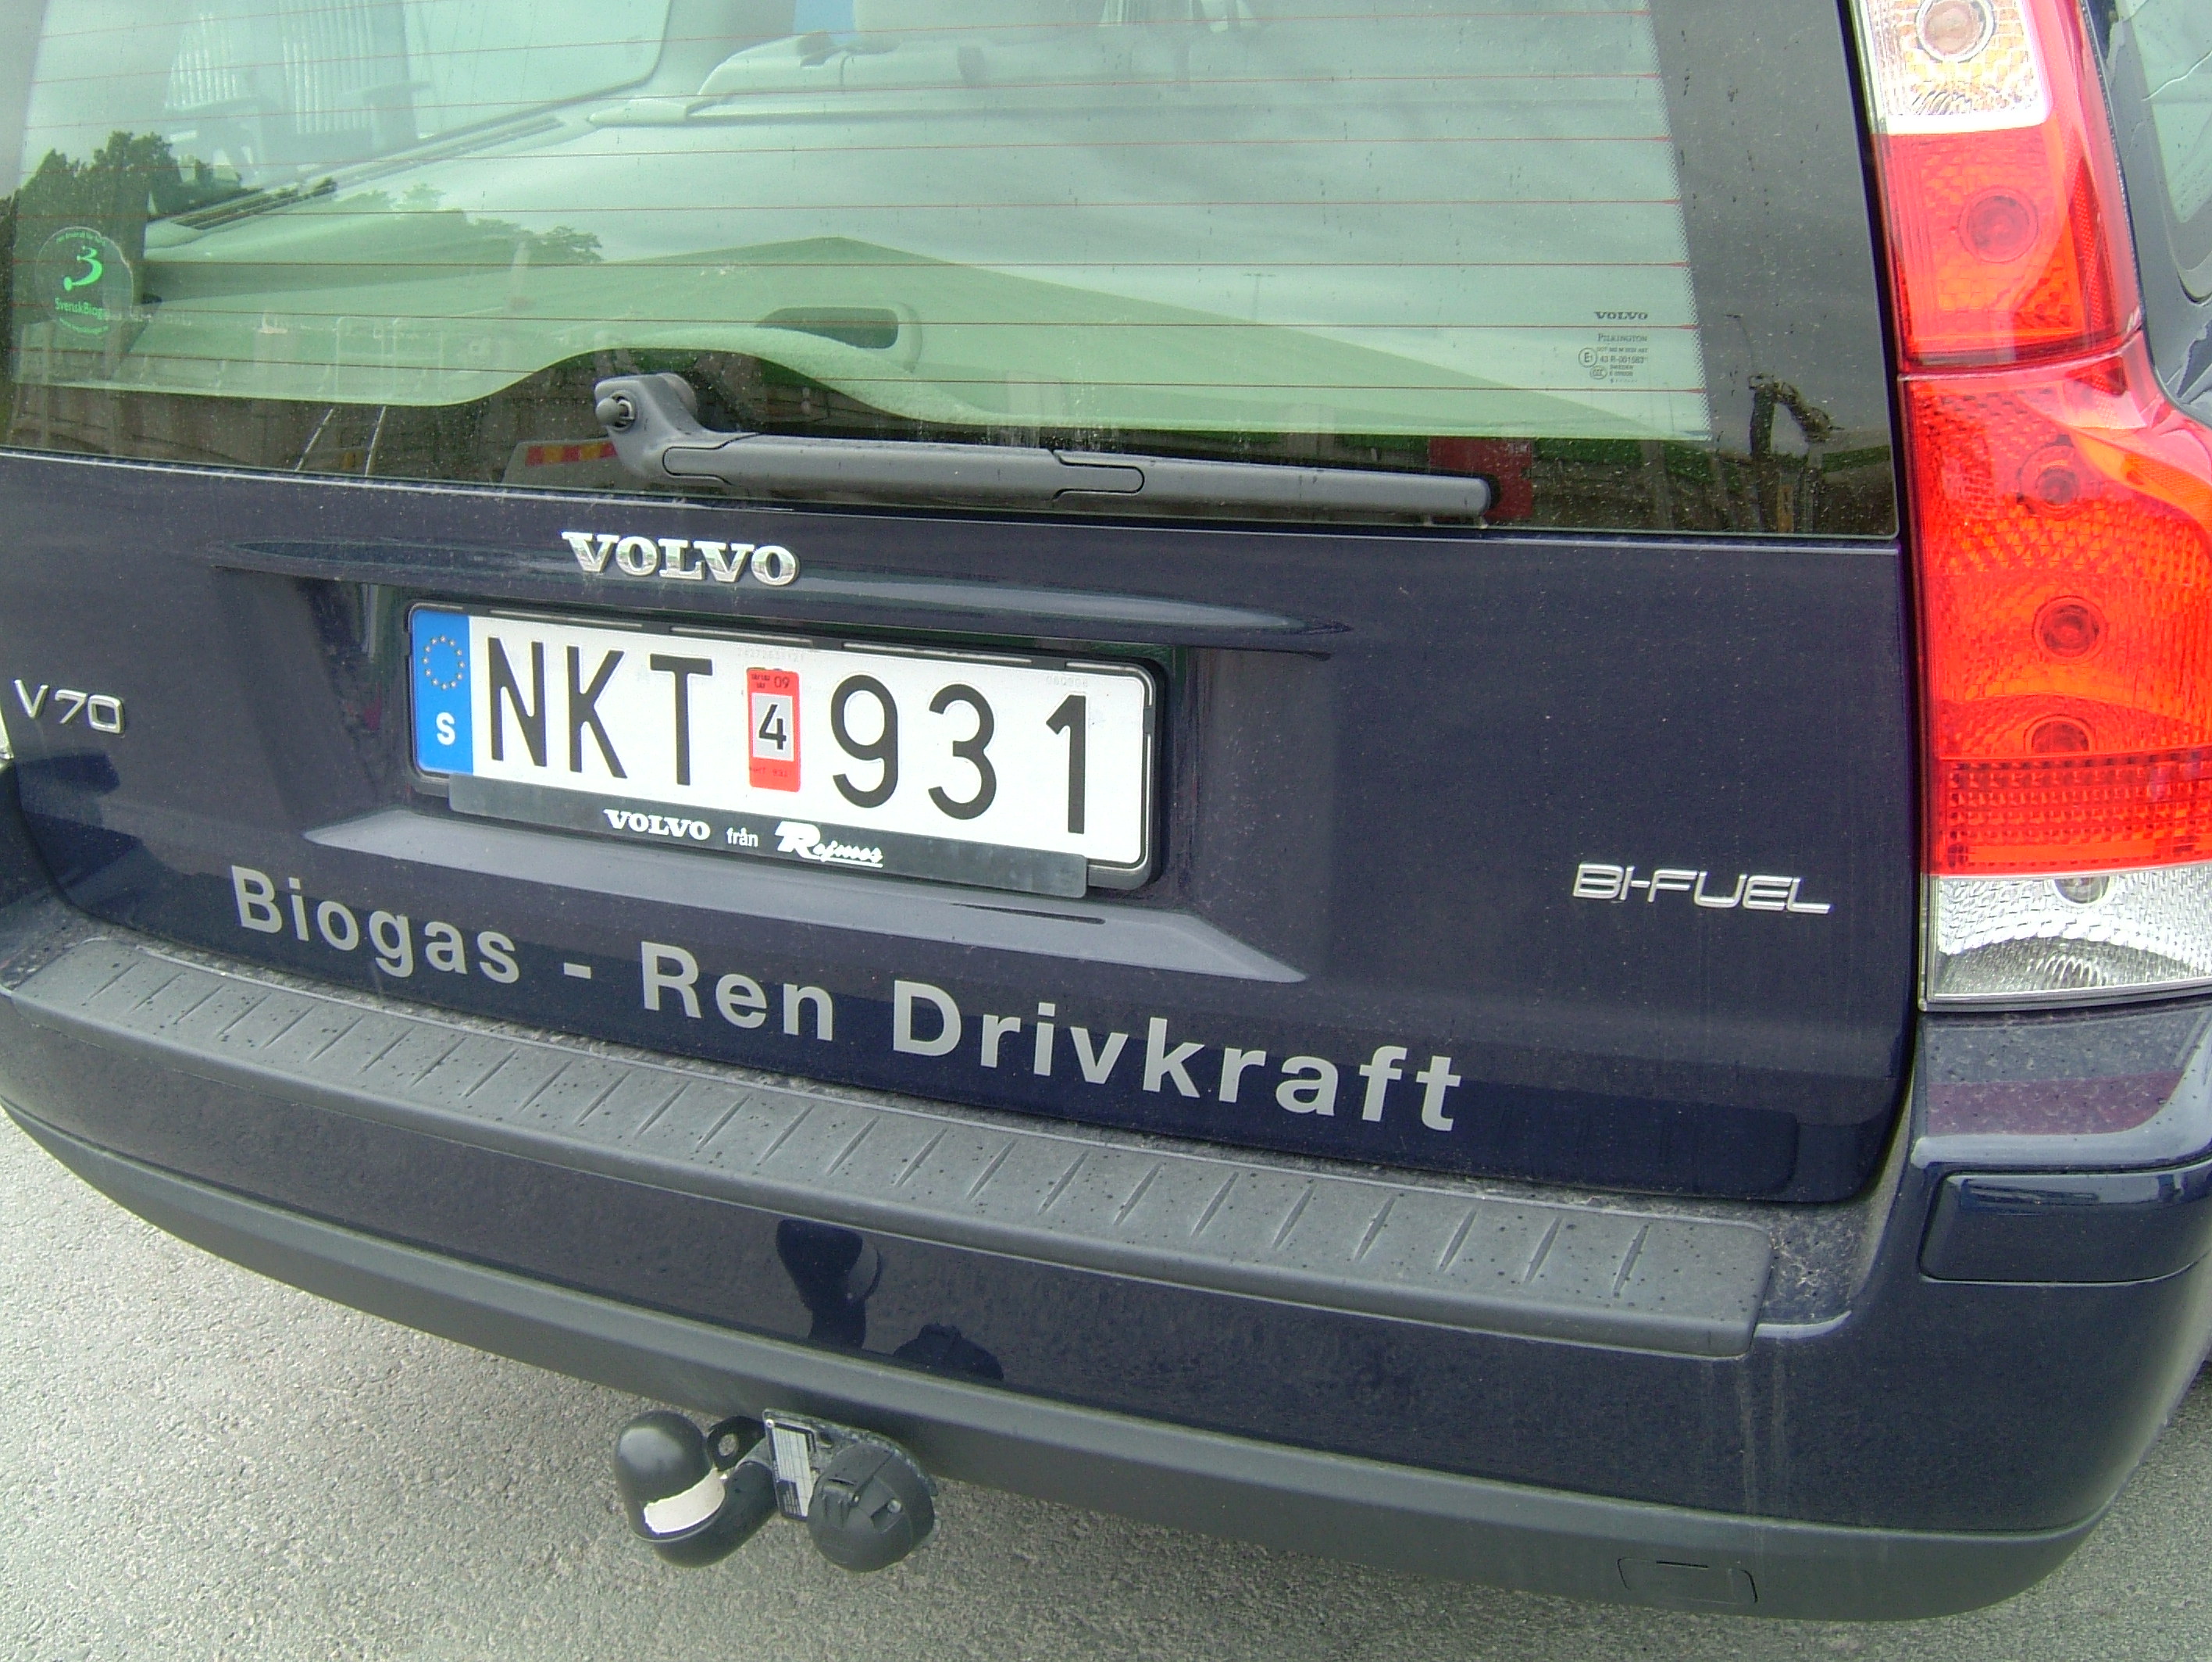 Biogas Volvo